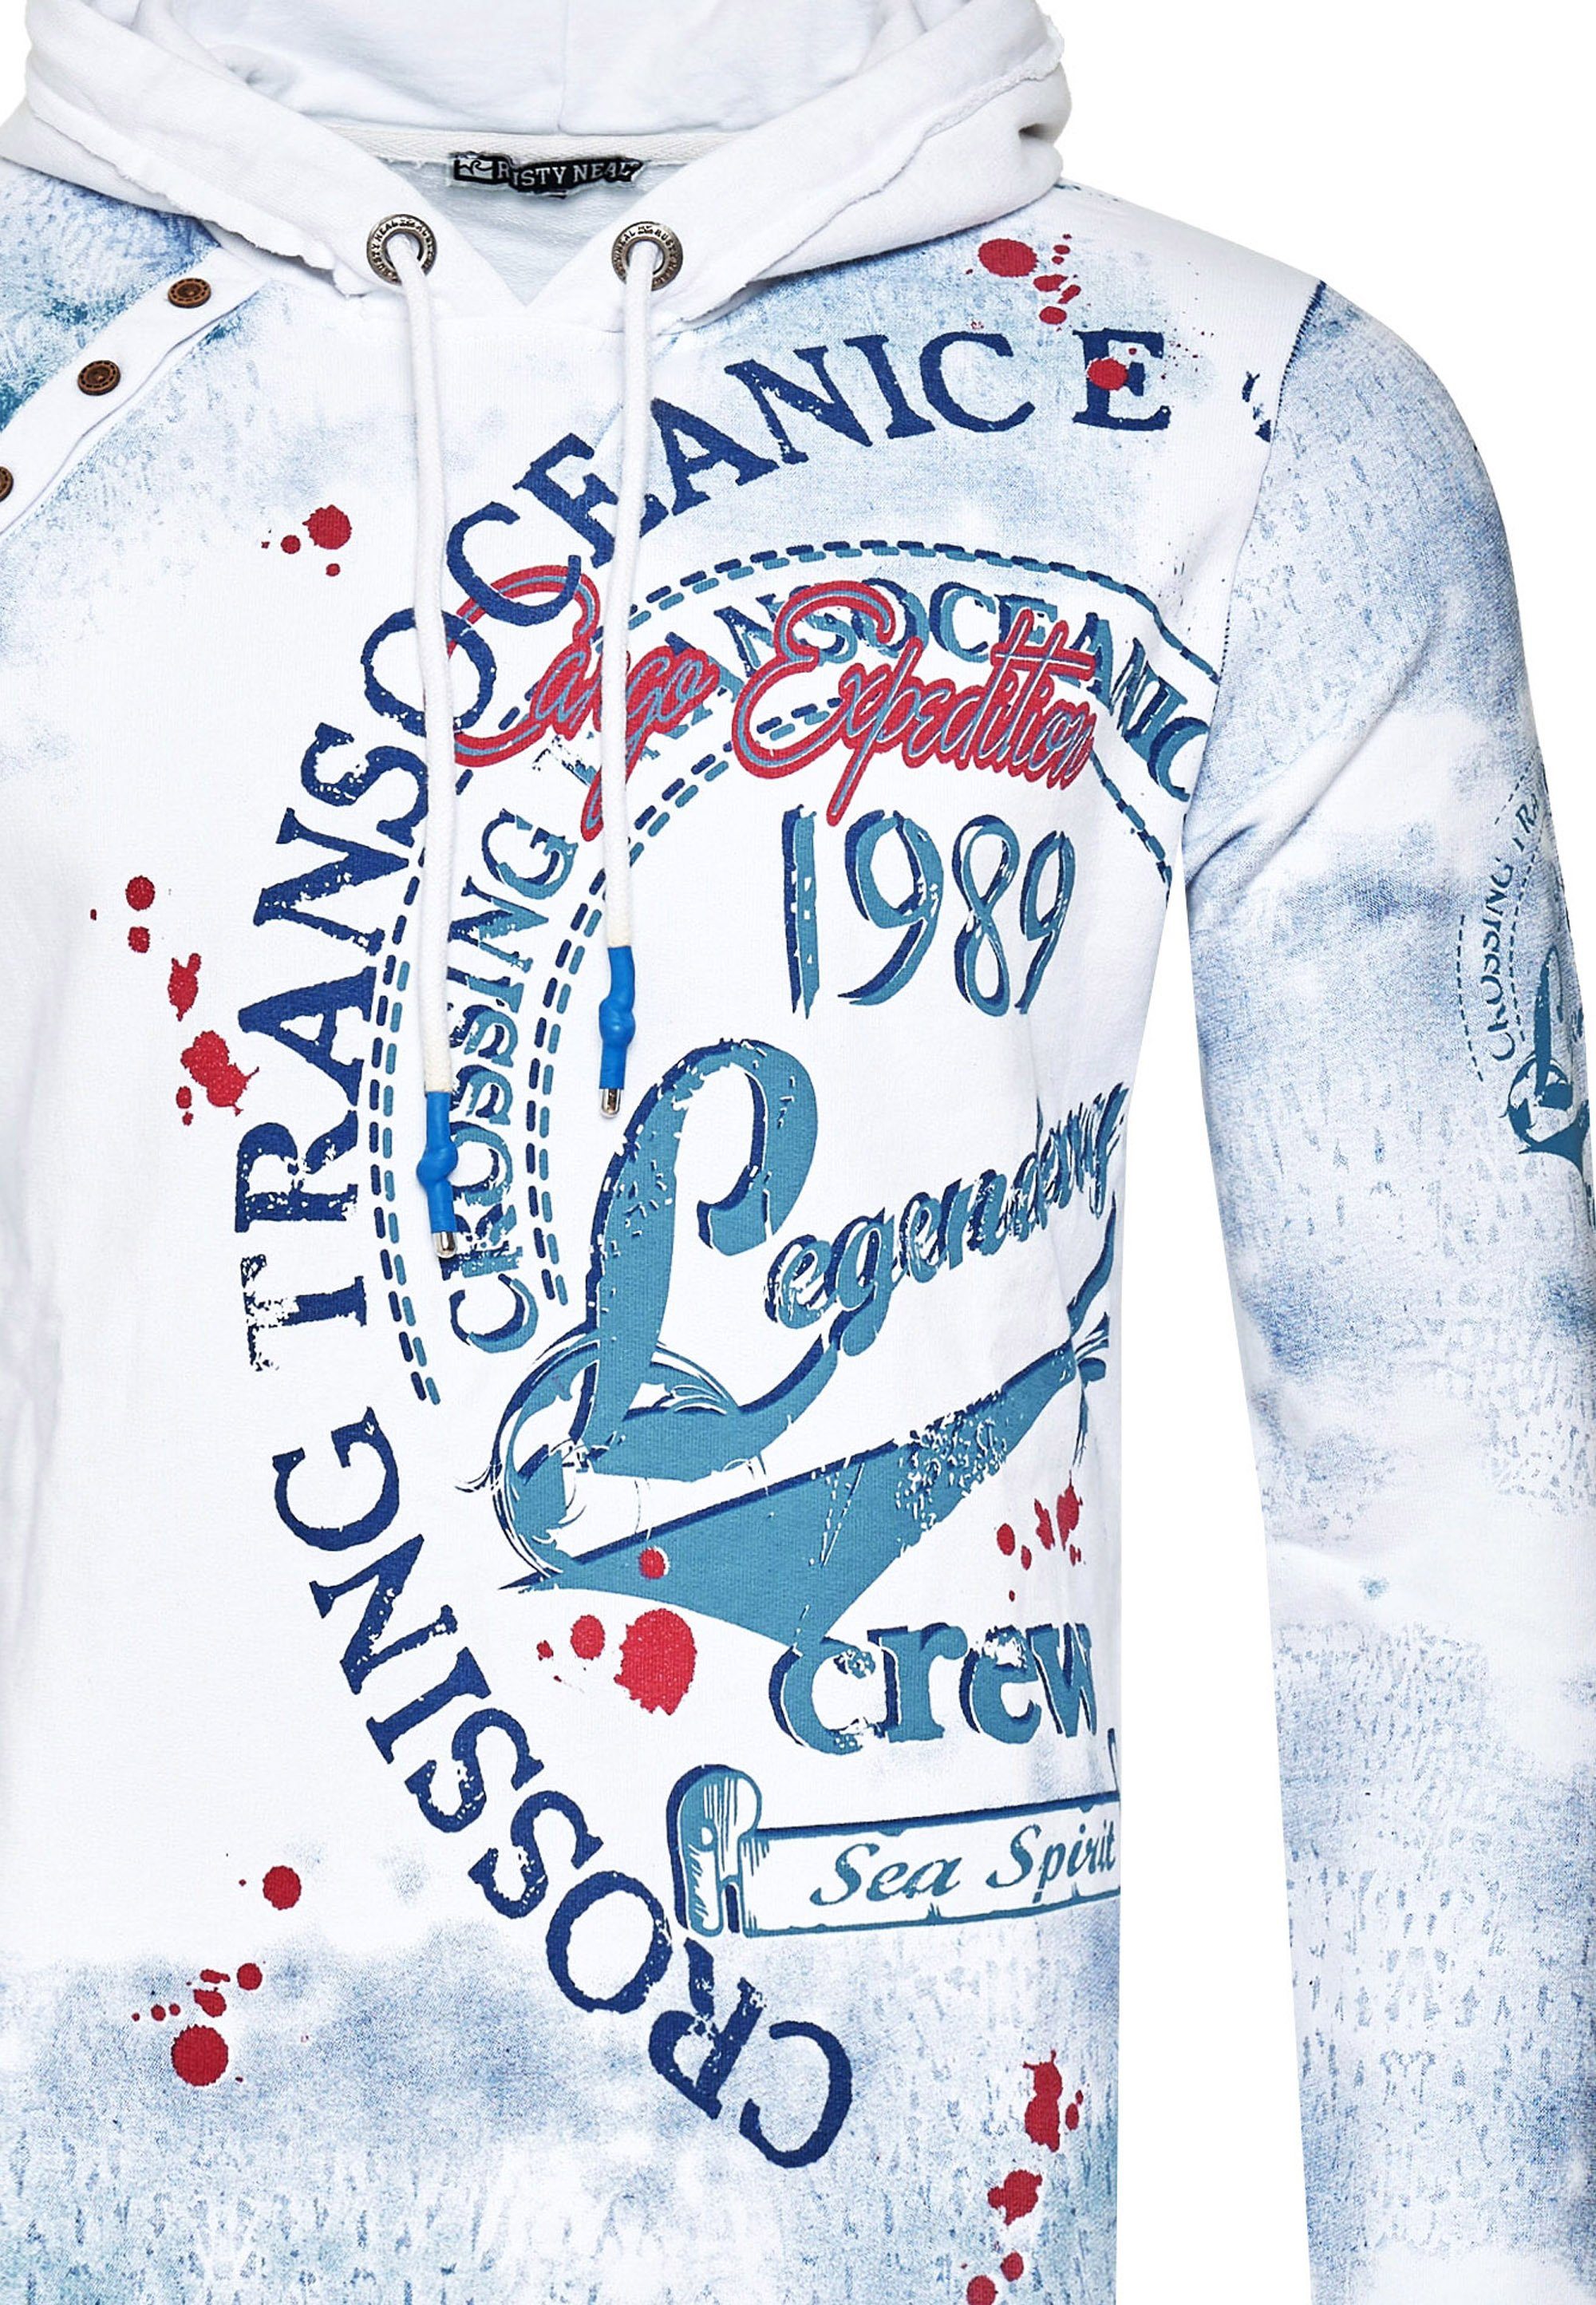 Rusty Neal Kapuzensweatshirt mit coolem weiß Frontprint